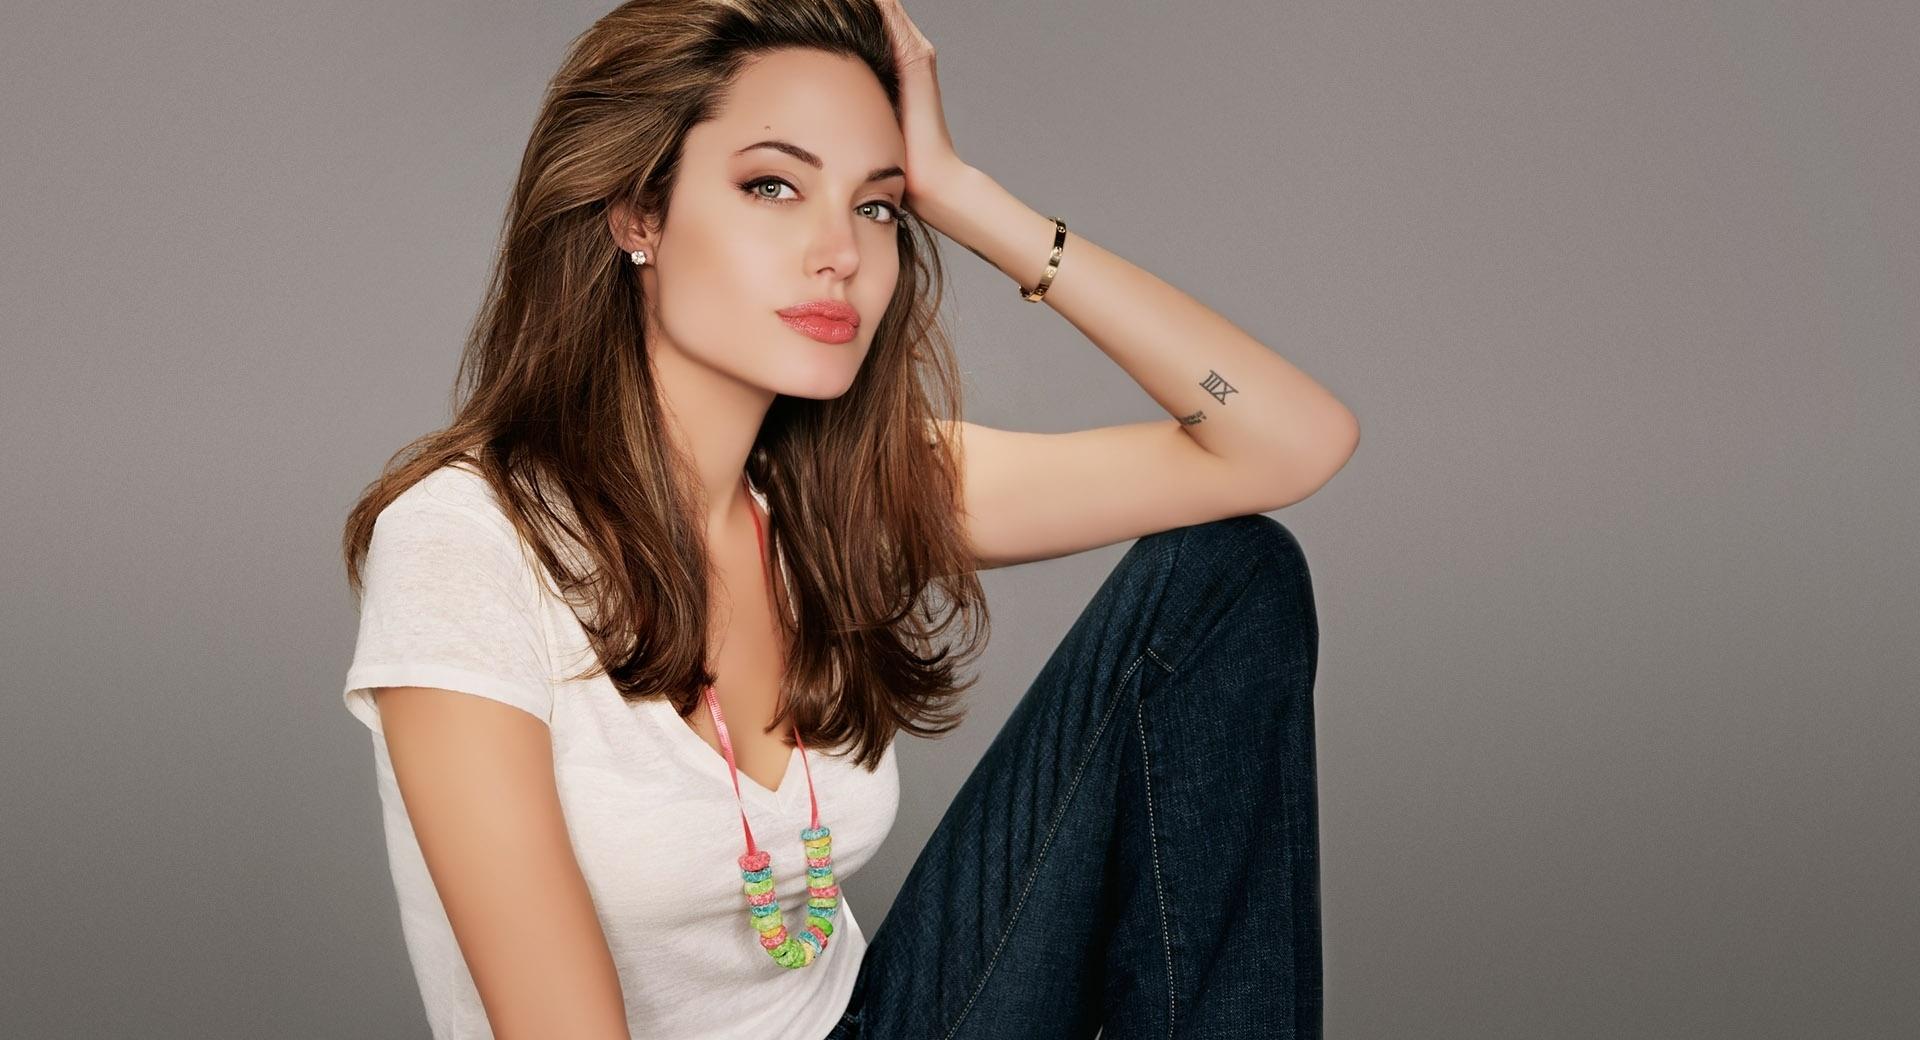 Angelina Jolie Beautiful at 2048 x 2048 iPad size wallpapers HD quality